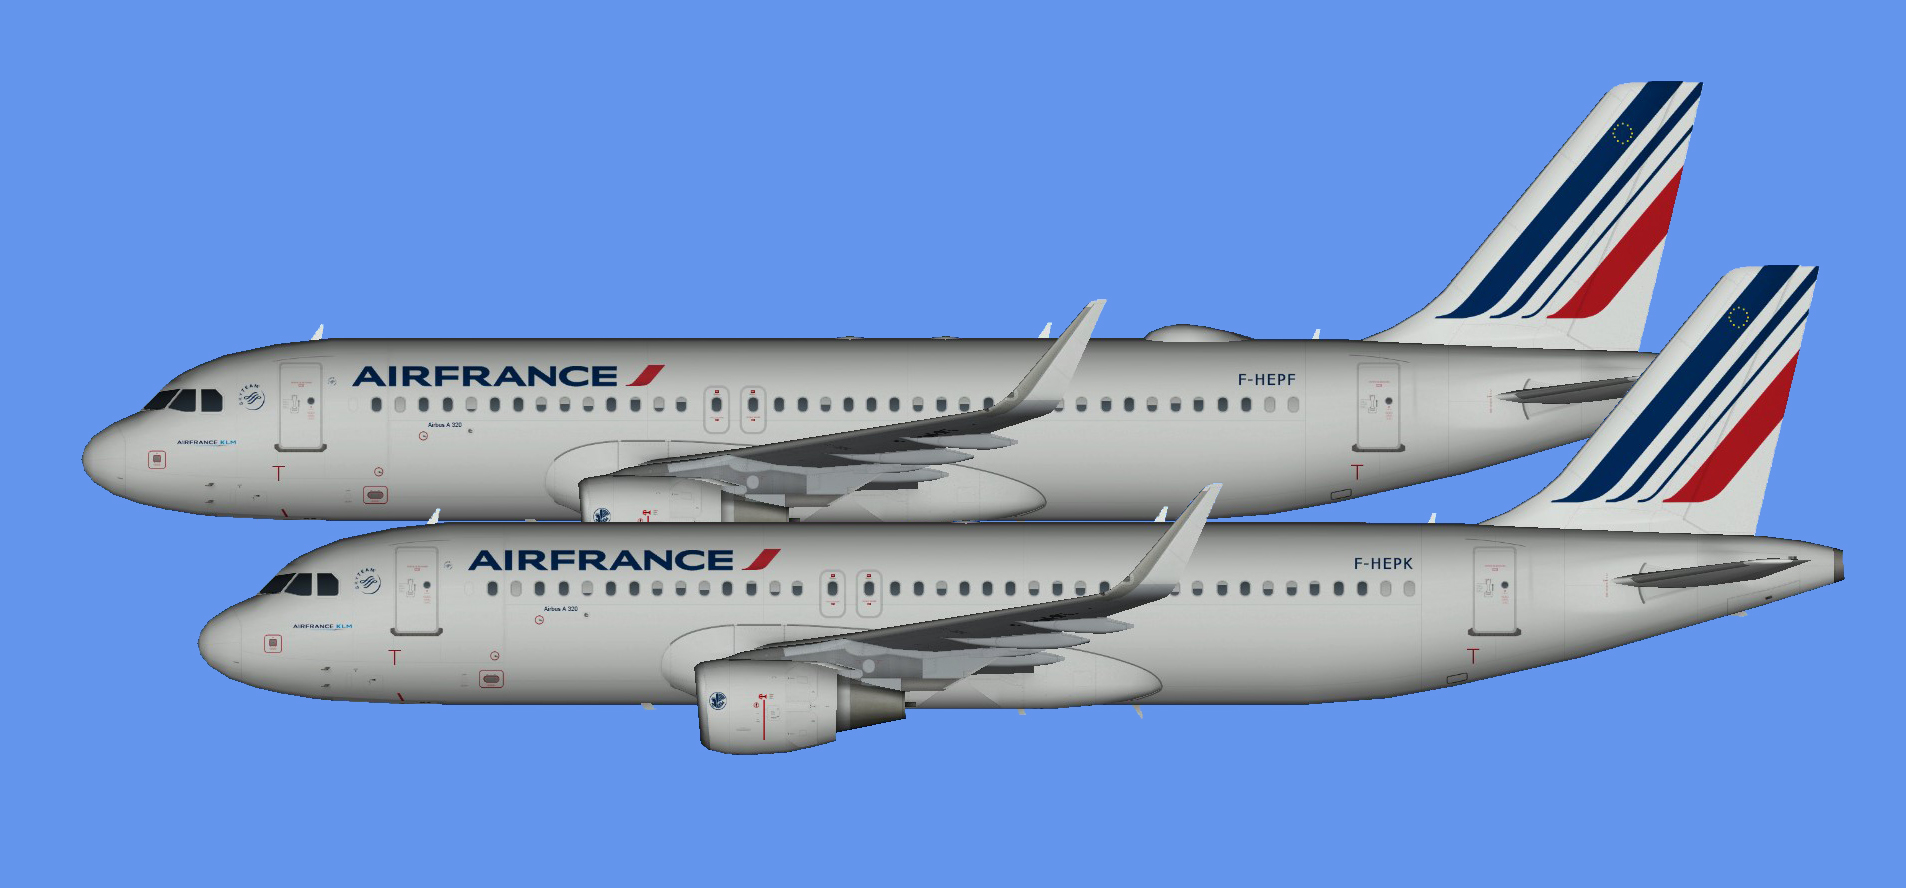 Air France Airbus A320 sharklets